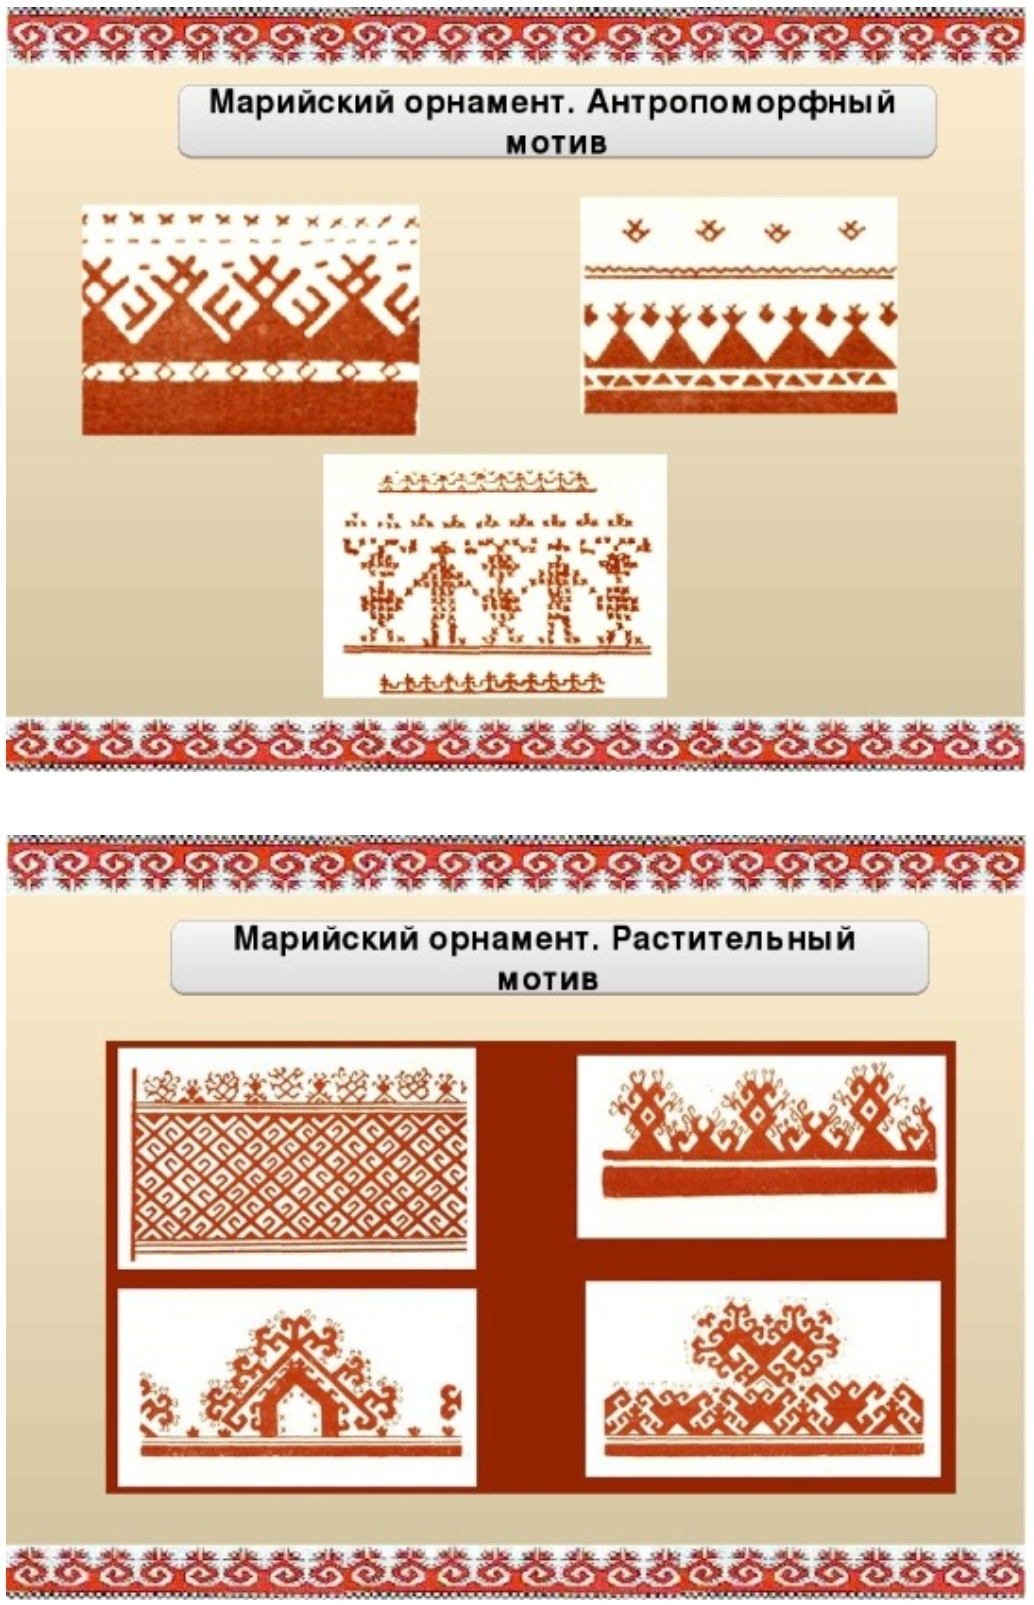 Знакомимся с марийским орнаментом — Портал Ассамблеи и Дома Дружбы народов  Татарстана